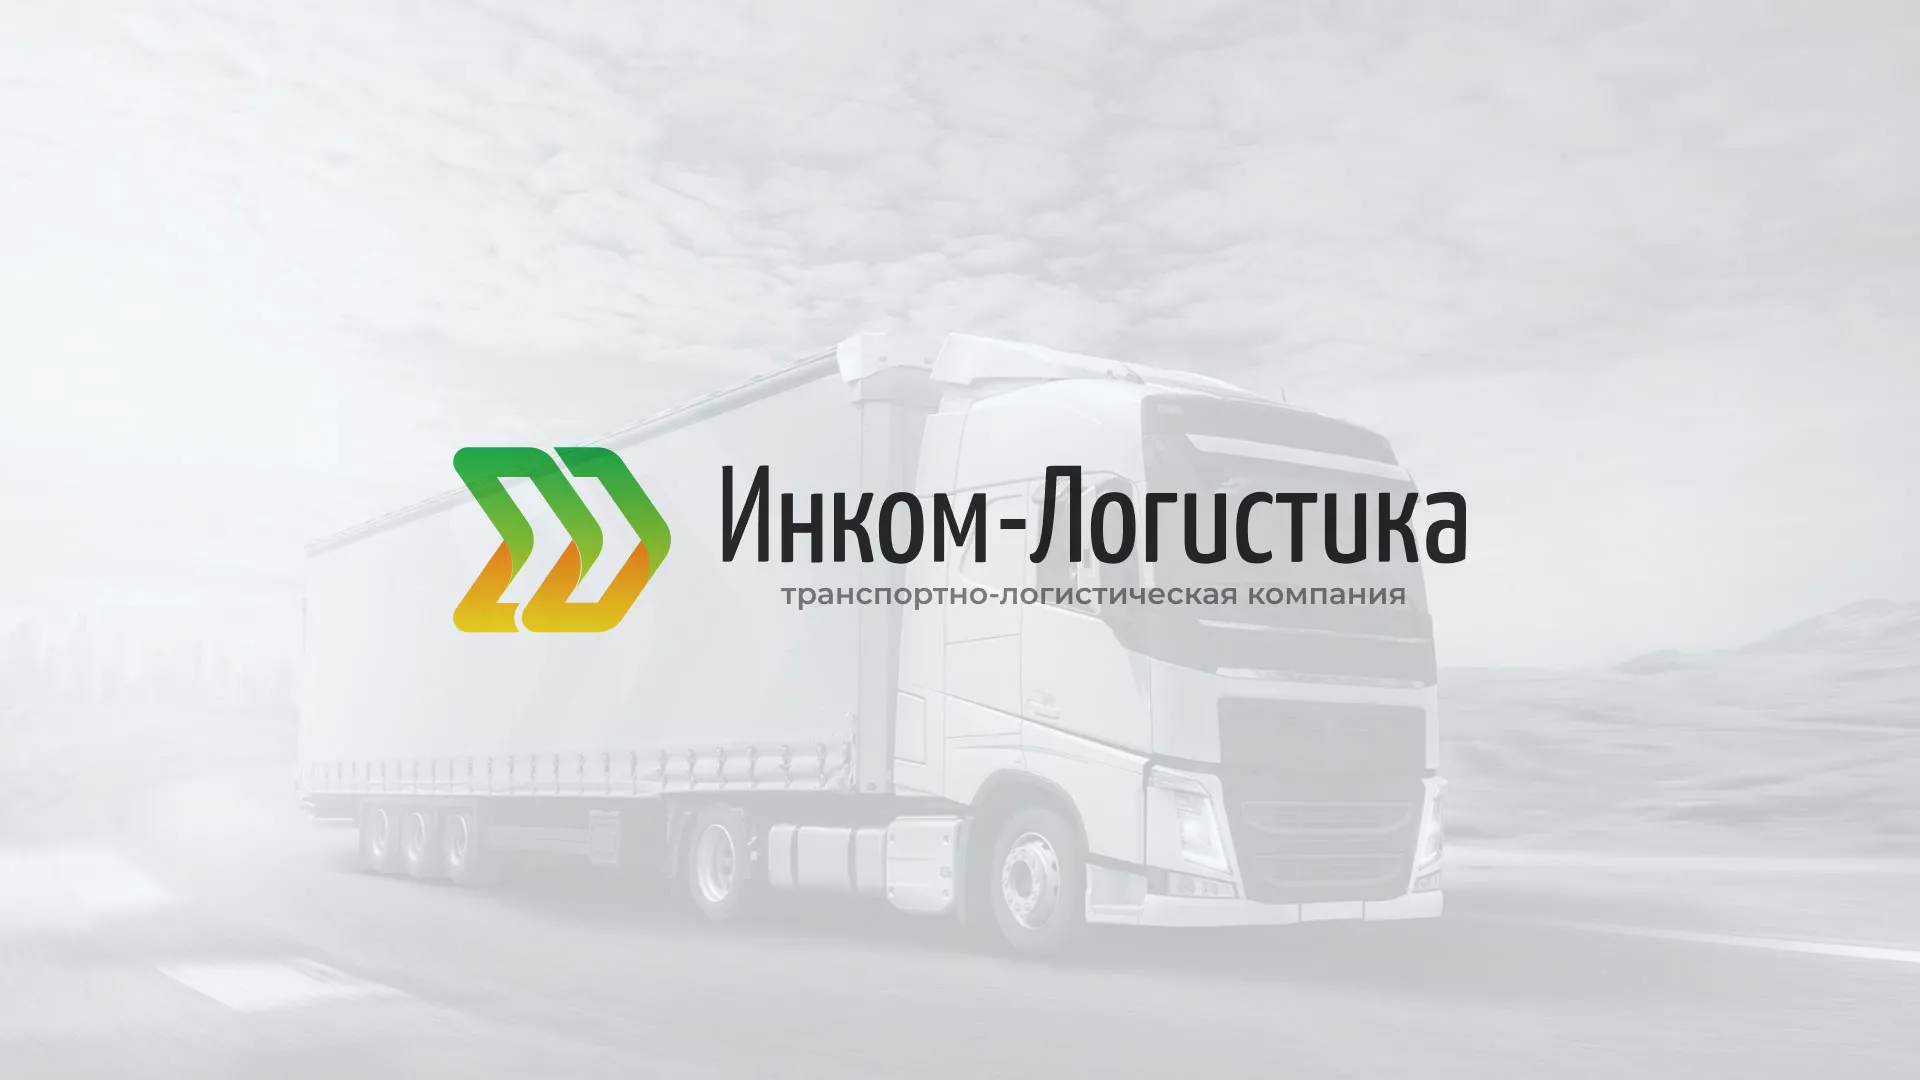 Разработка логотипа и сайта компании «Инком-Логистика» в Сестрорецке